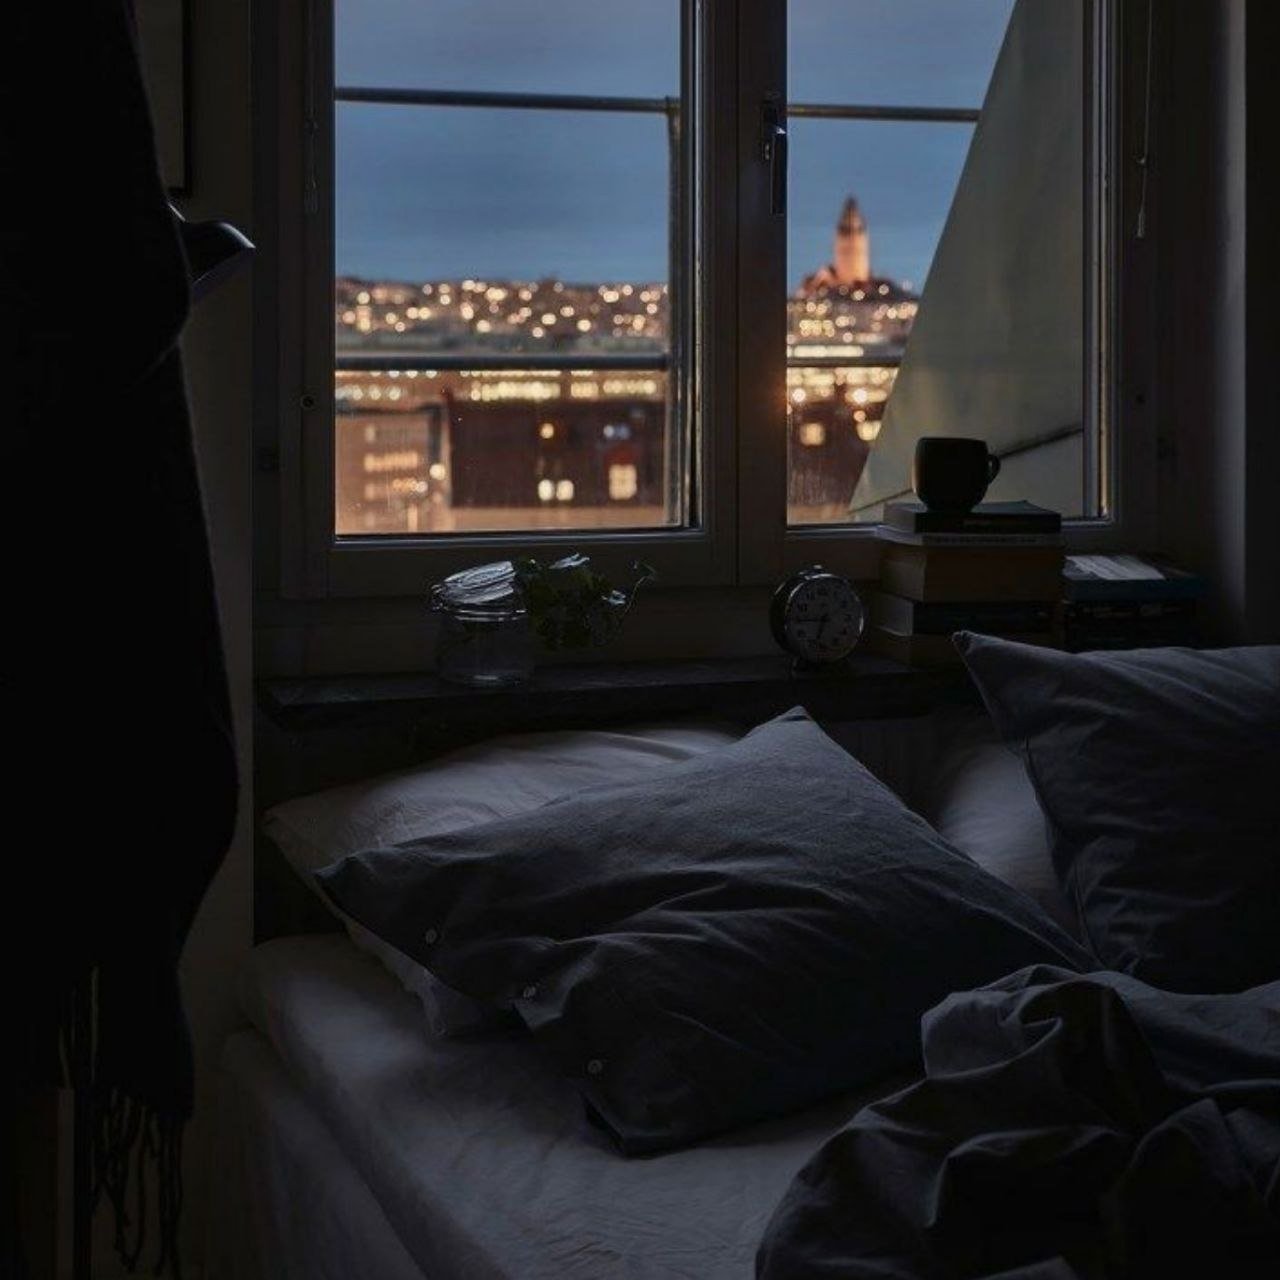 The window last night. Уютная комнатка с окном. Комната с окном. Тёмная комнота с окном. Уютная комната с кроватью у окна.